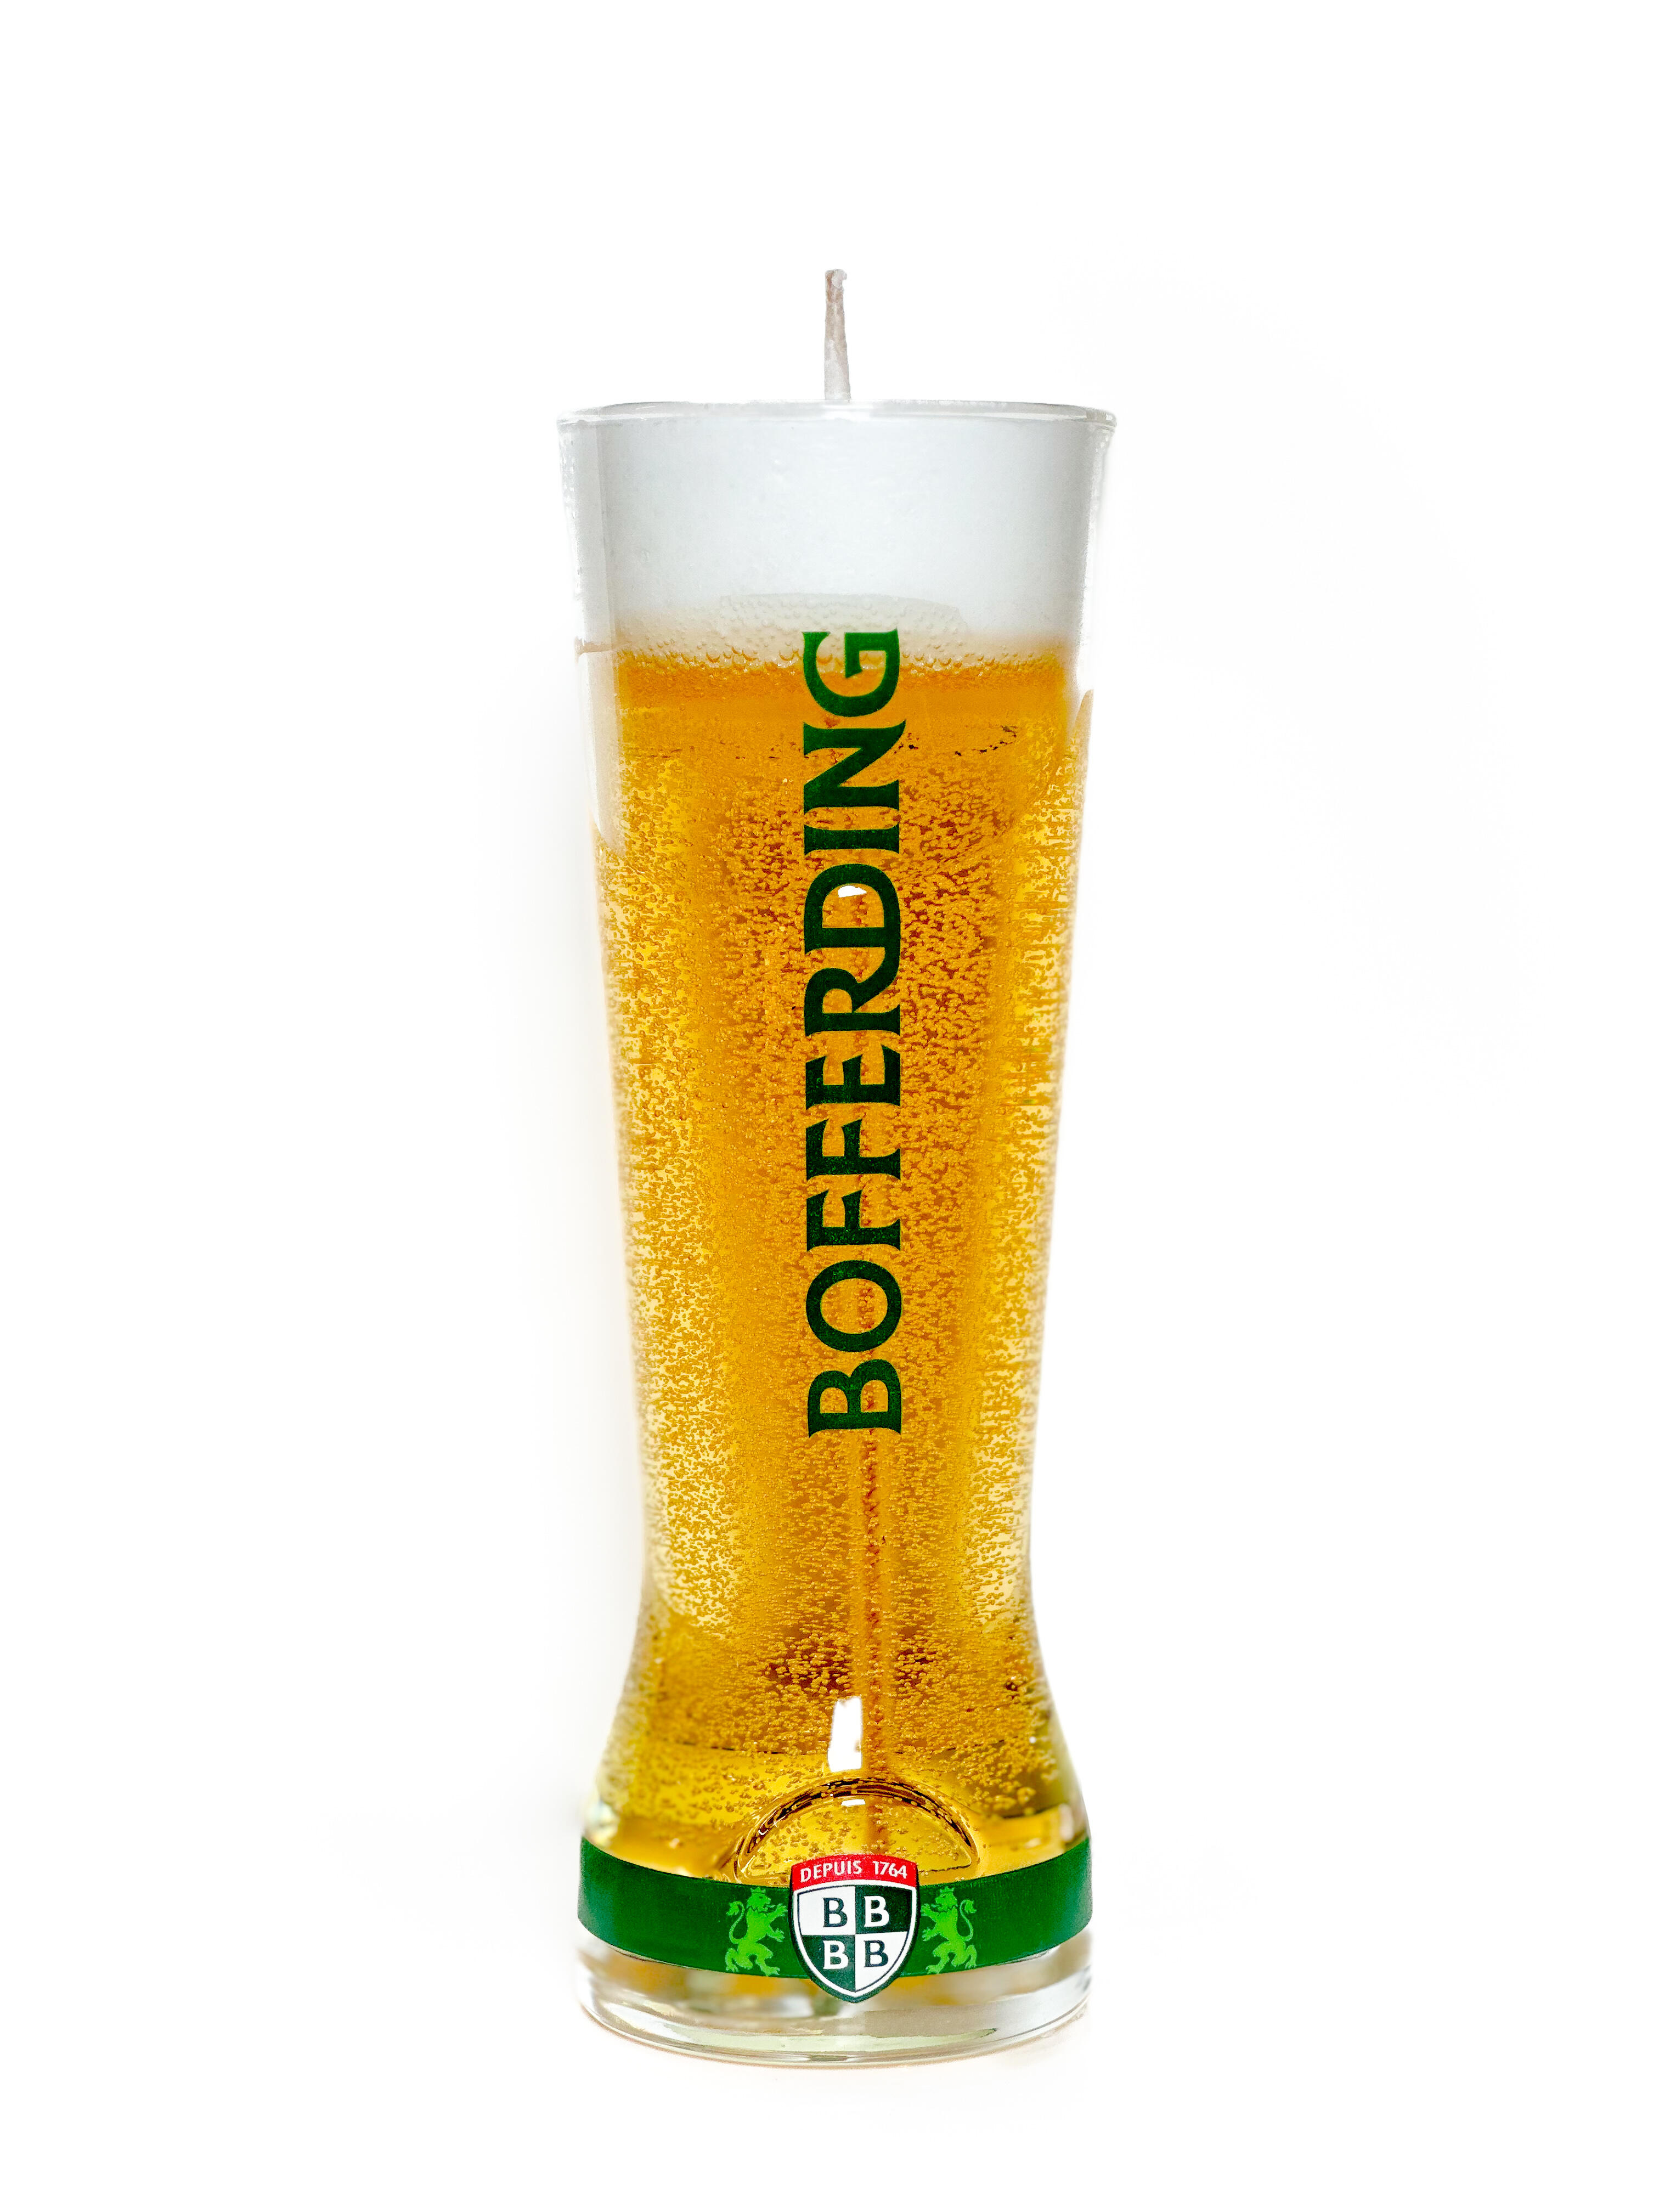 Bougie bière "flûte" - Bofferding